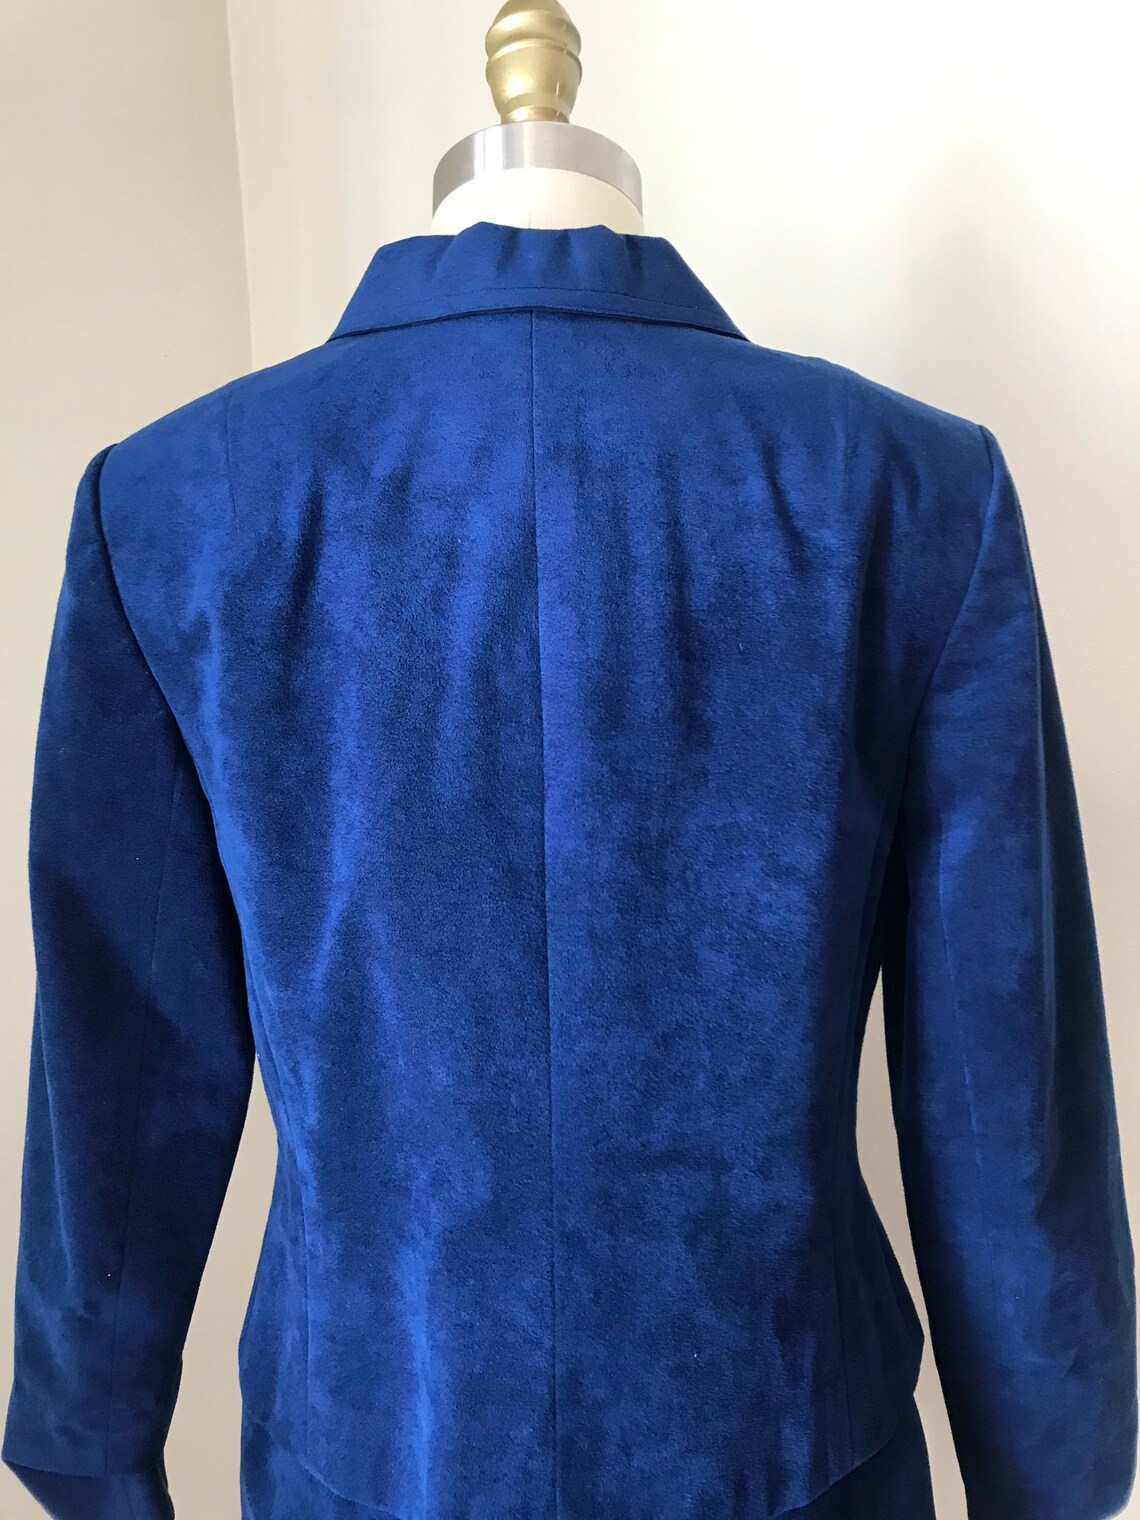 Midnight blue suede 3 piece suit excellent condition jacket | Etsy